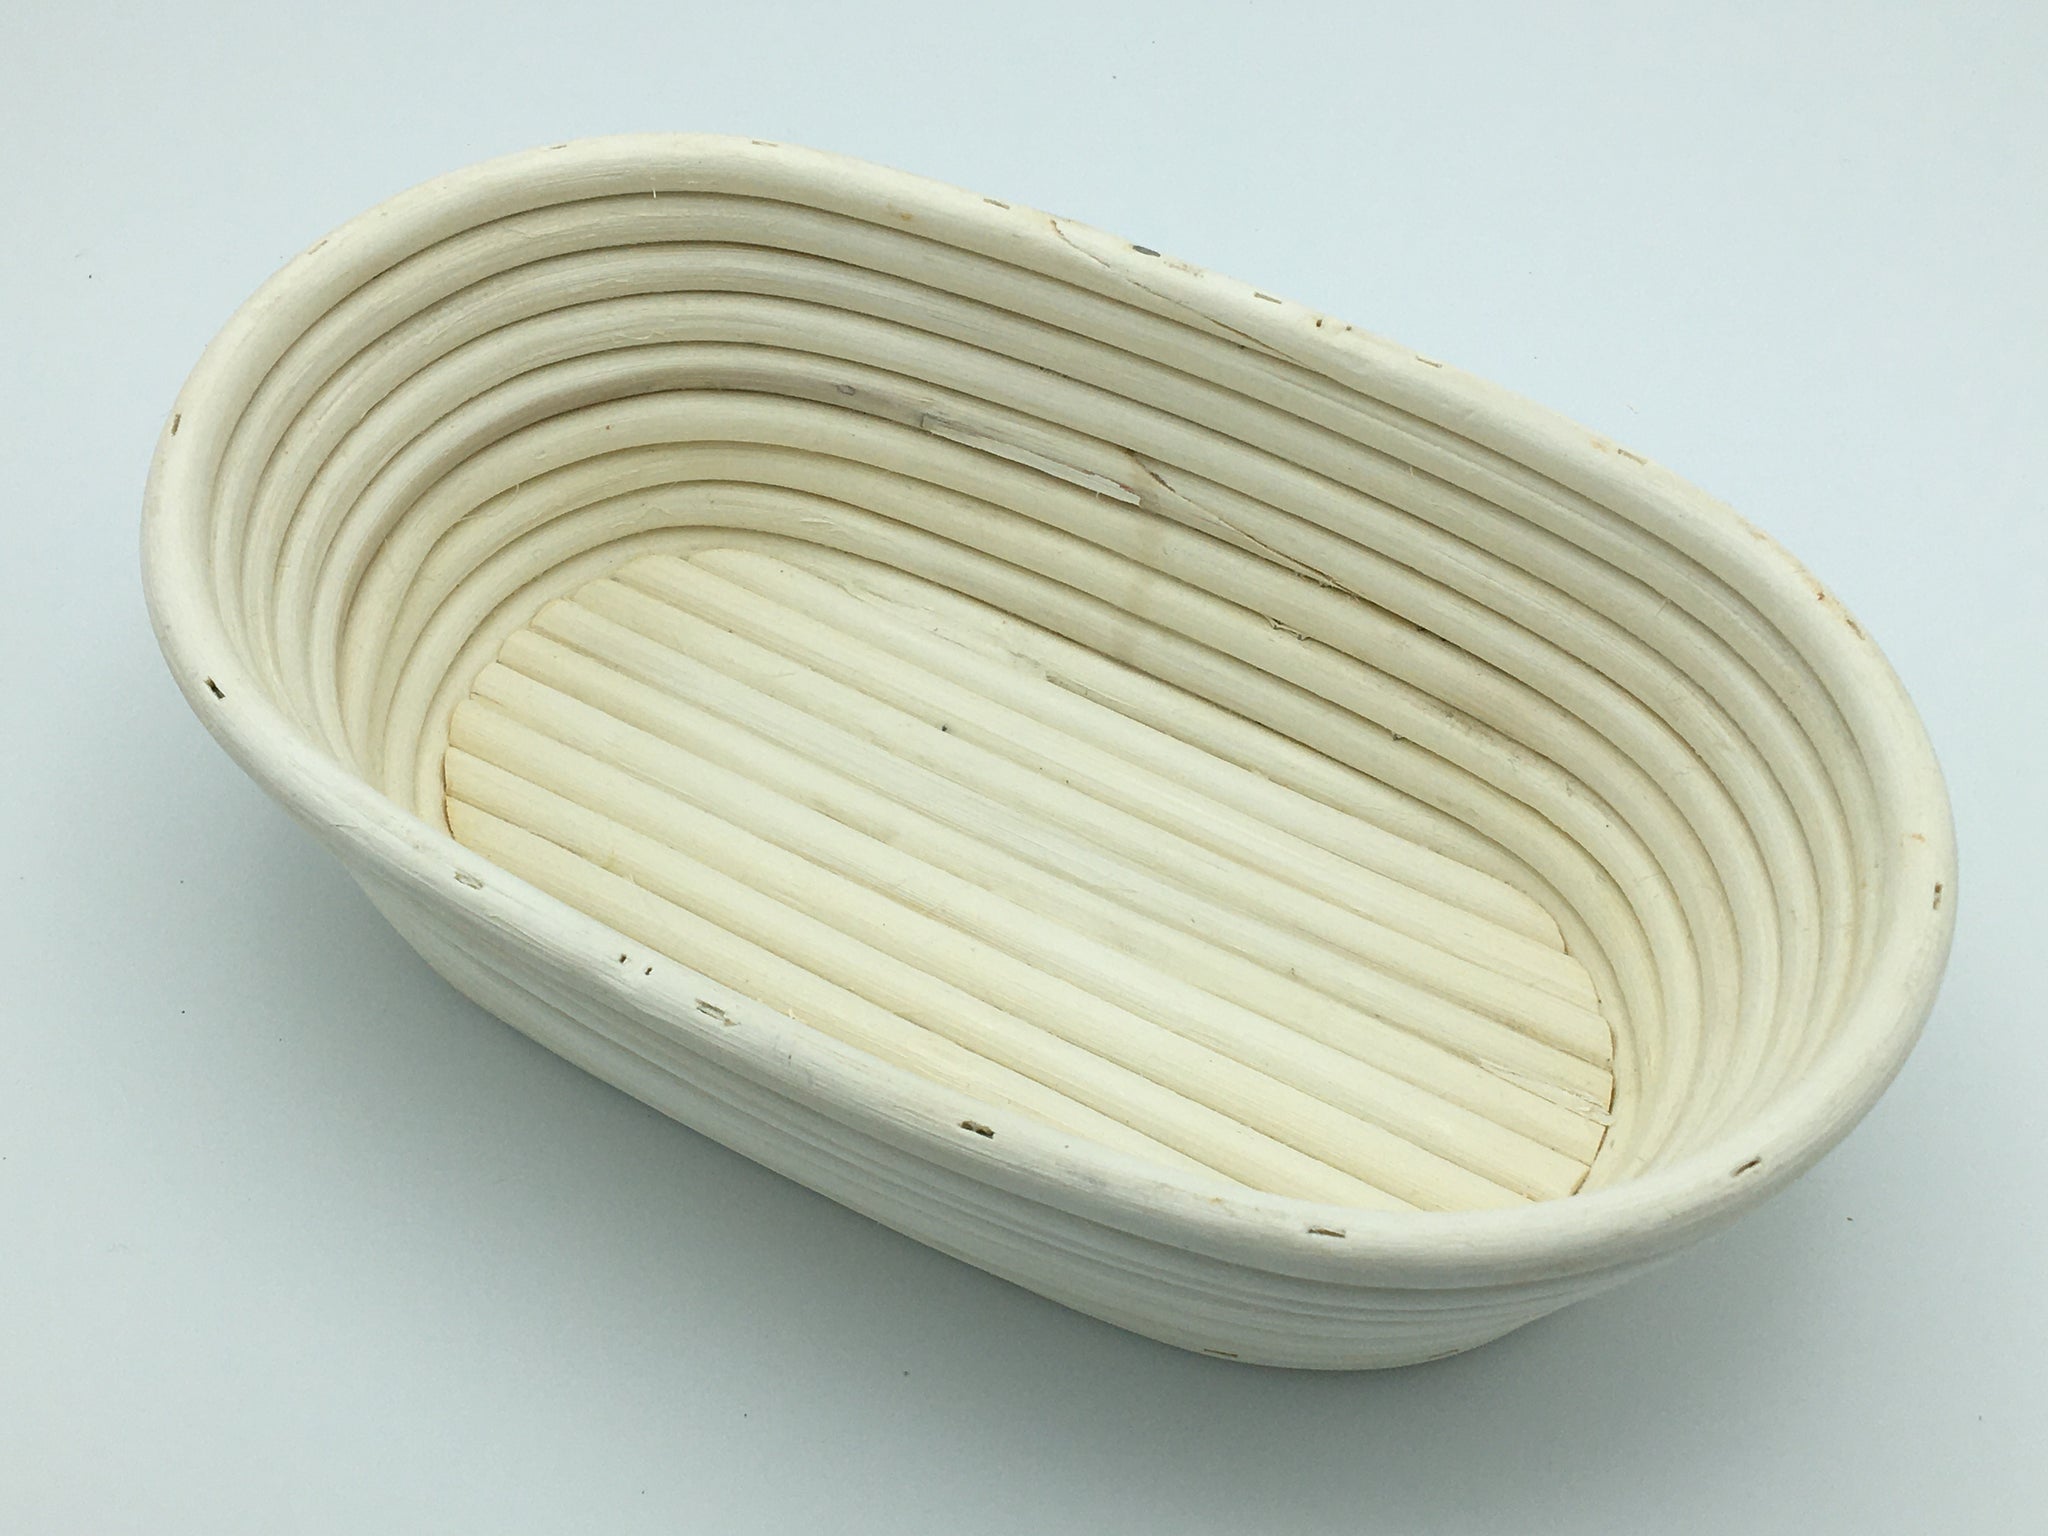 Wicker Proofing Basket - Elmendorf Baking Supplies